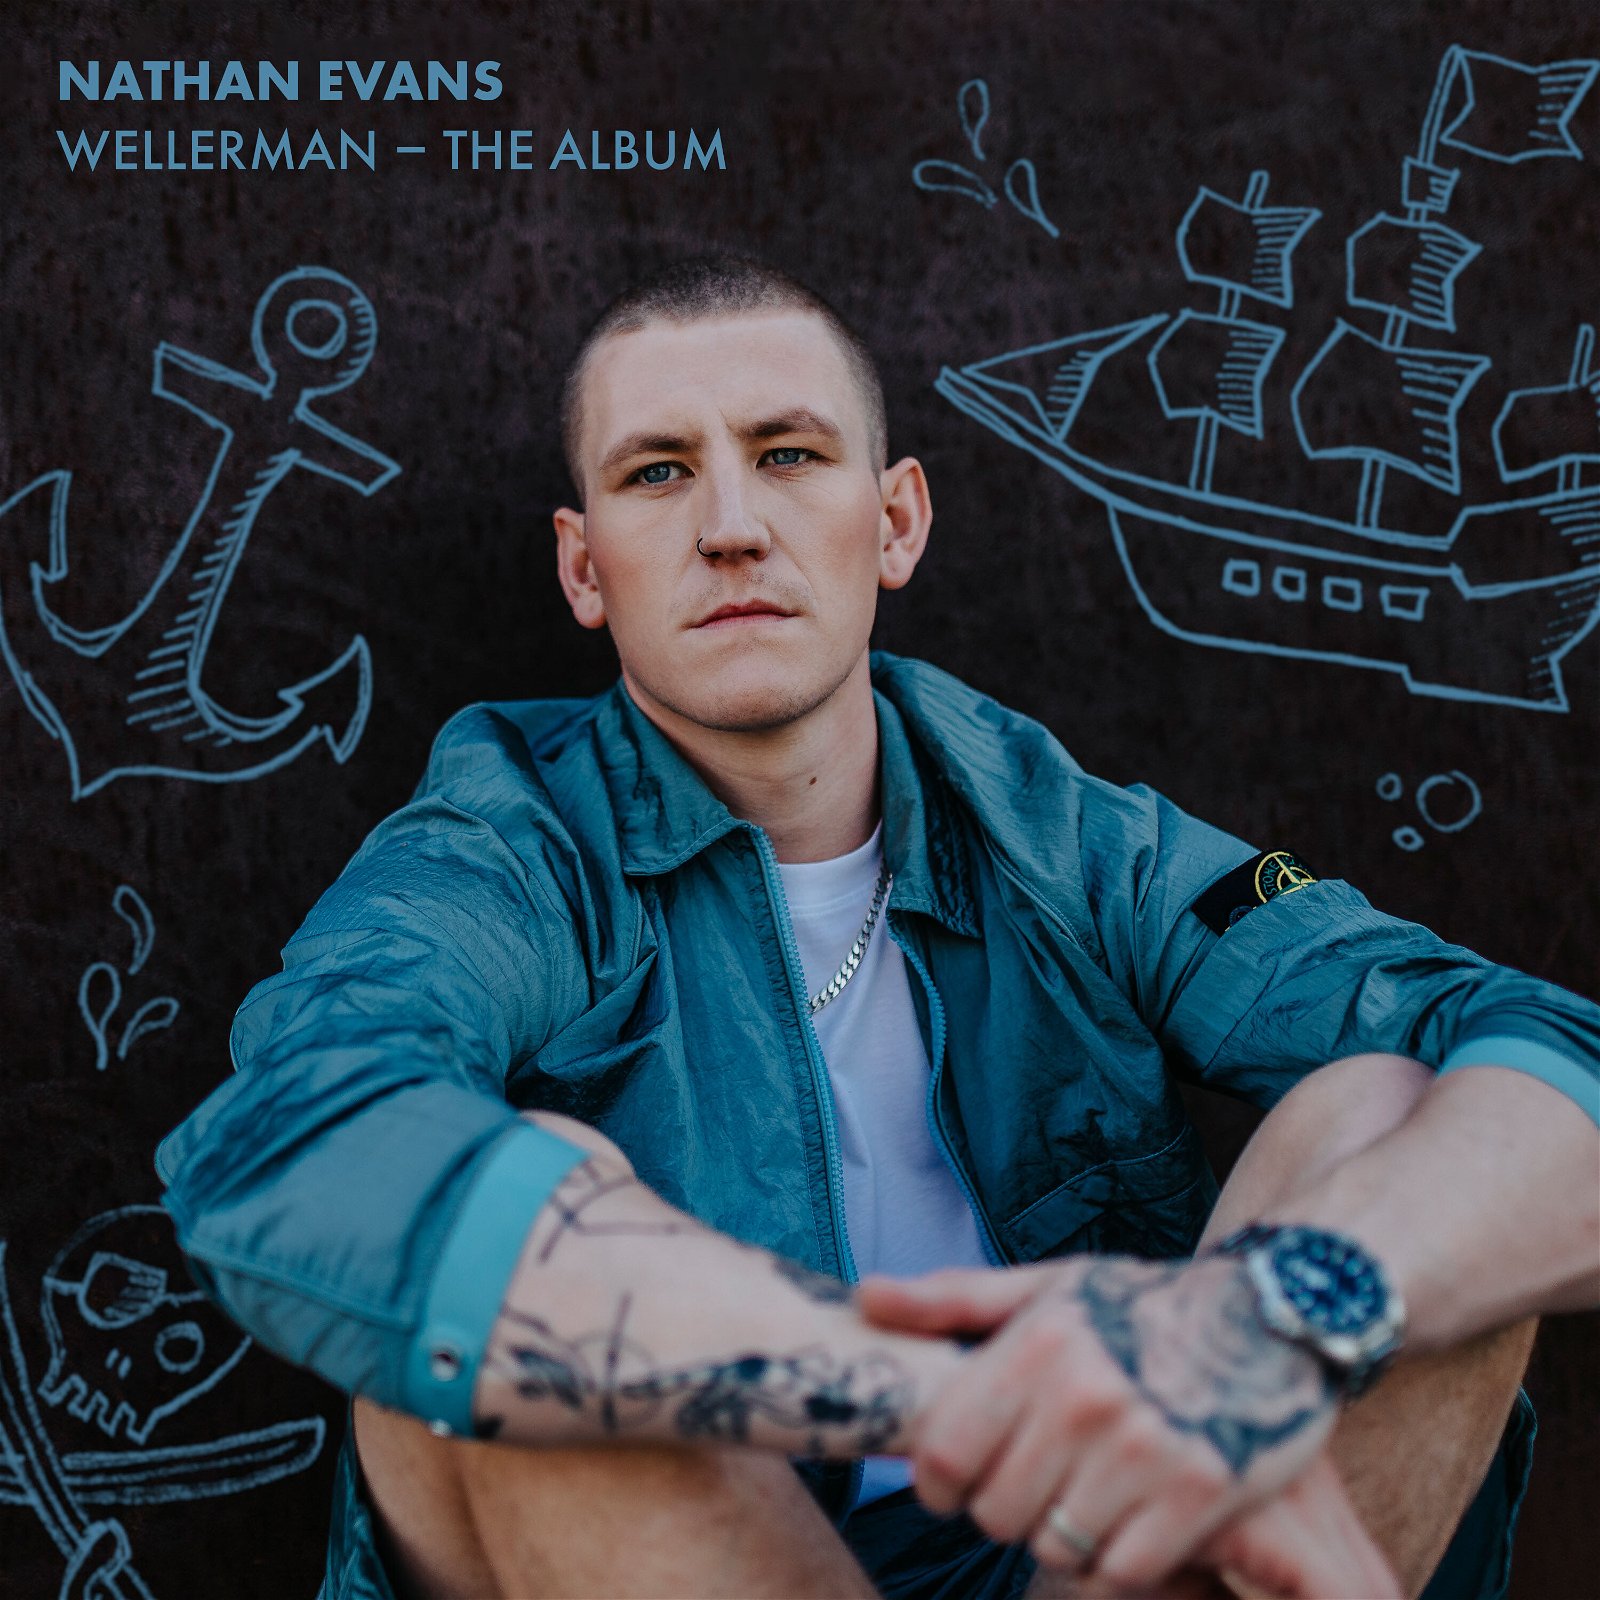 CD Shop - EVANS, NATHAN WELLERMAN - THE ALBUM